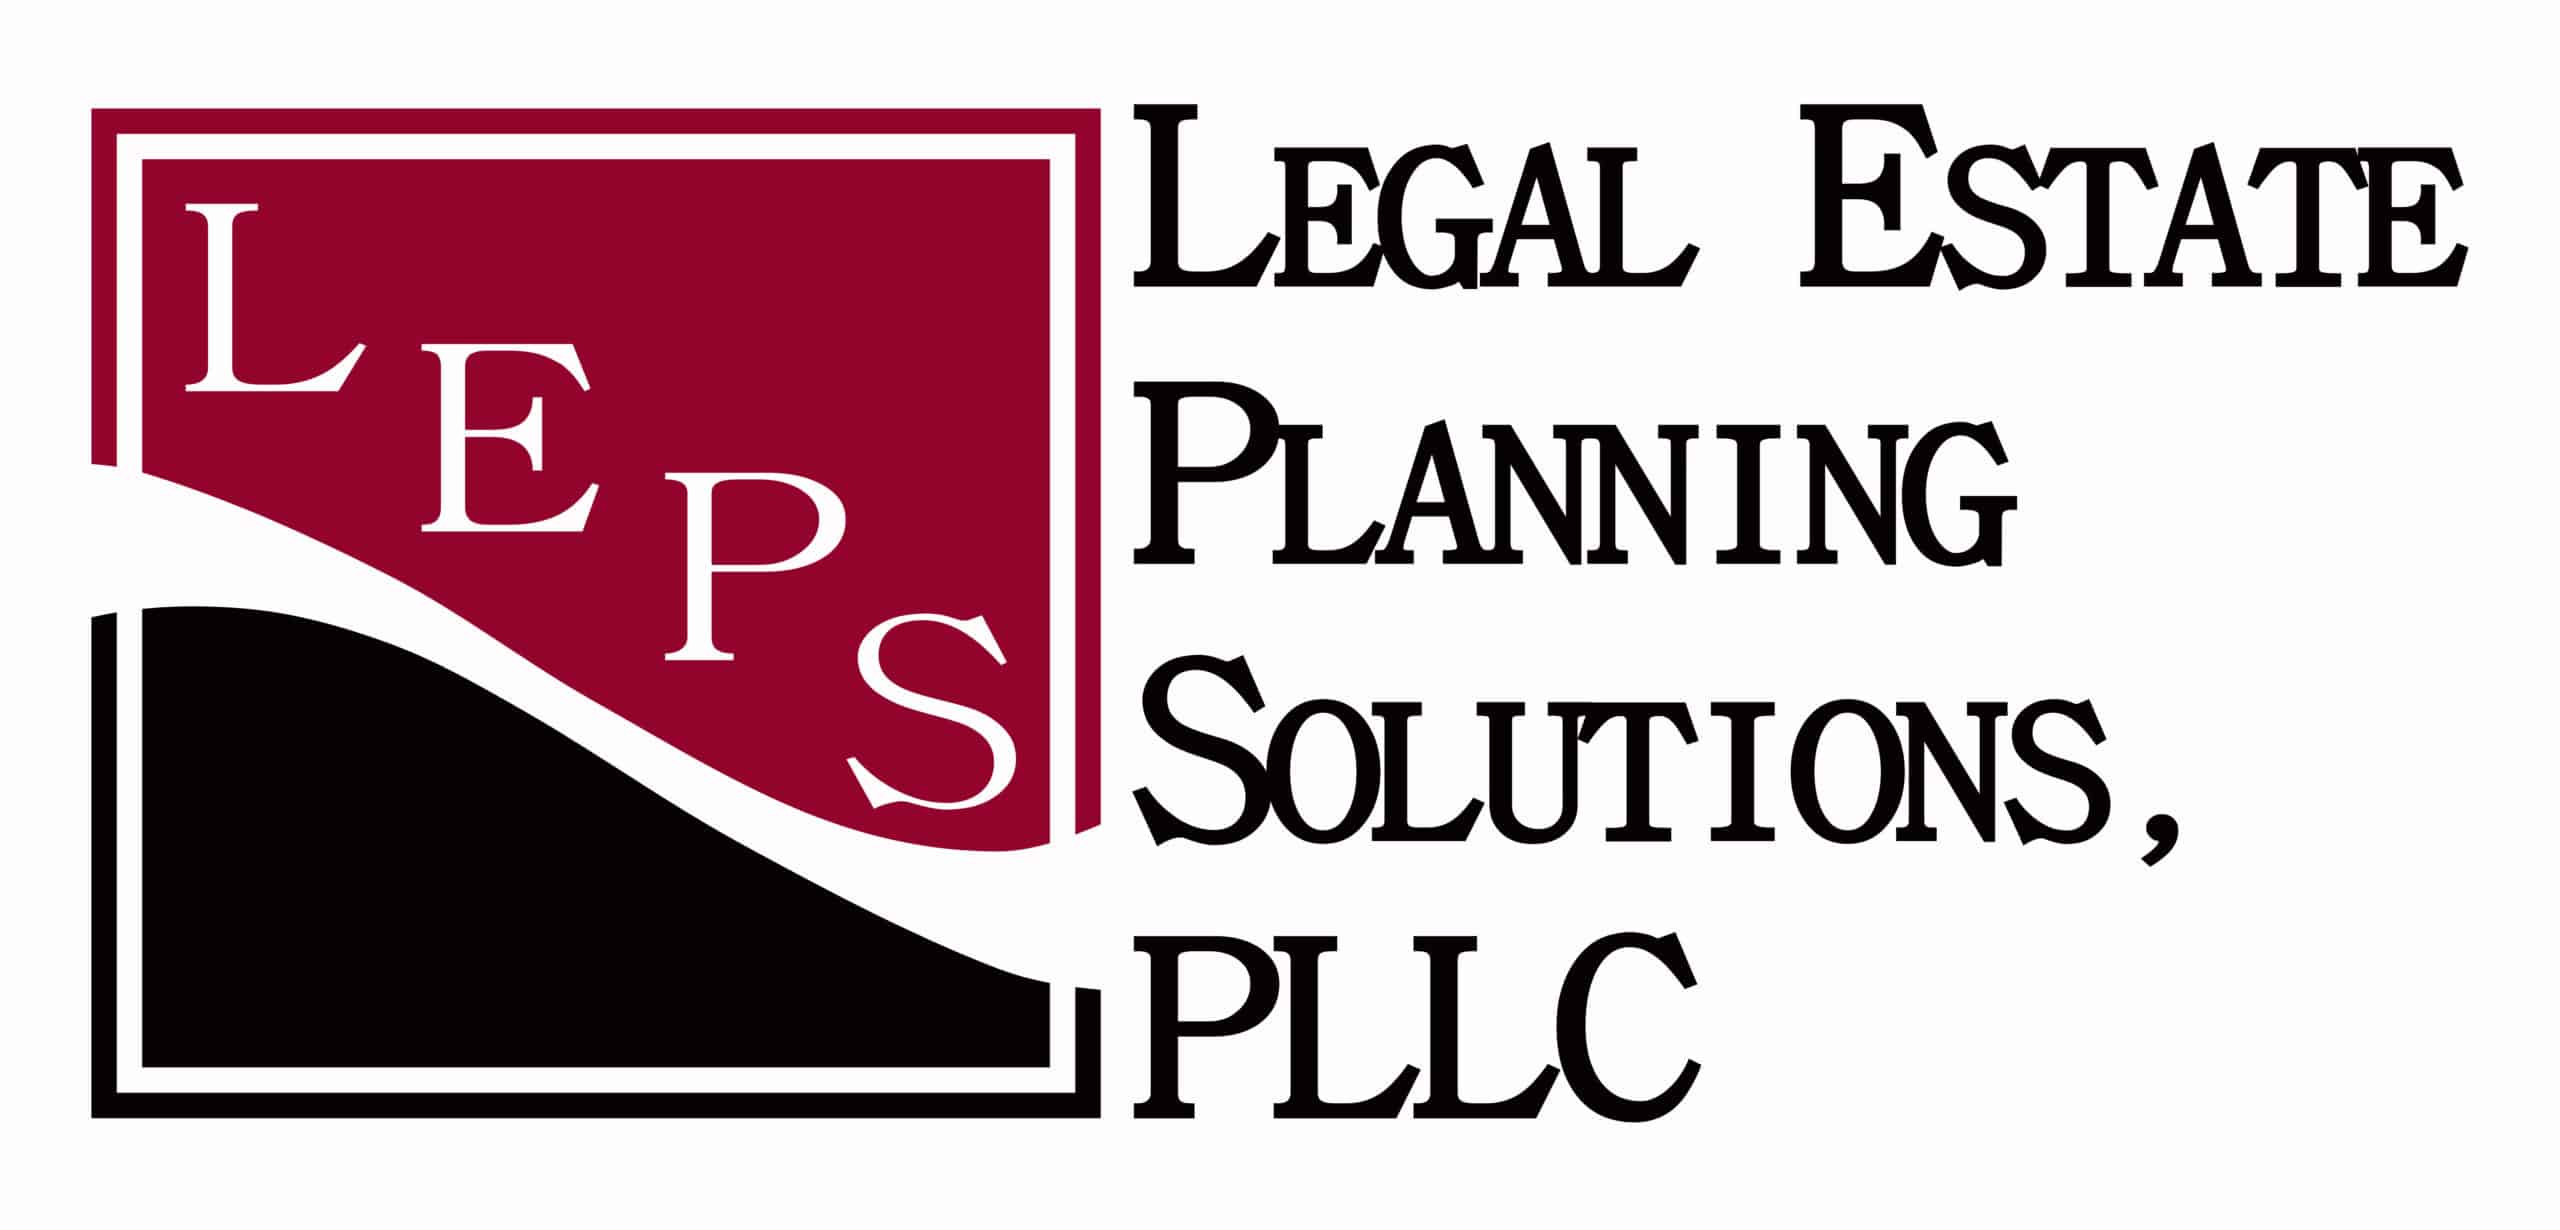 Legal Estate Planning Solutions